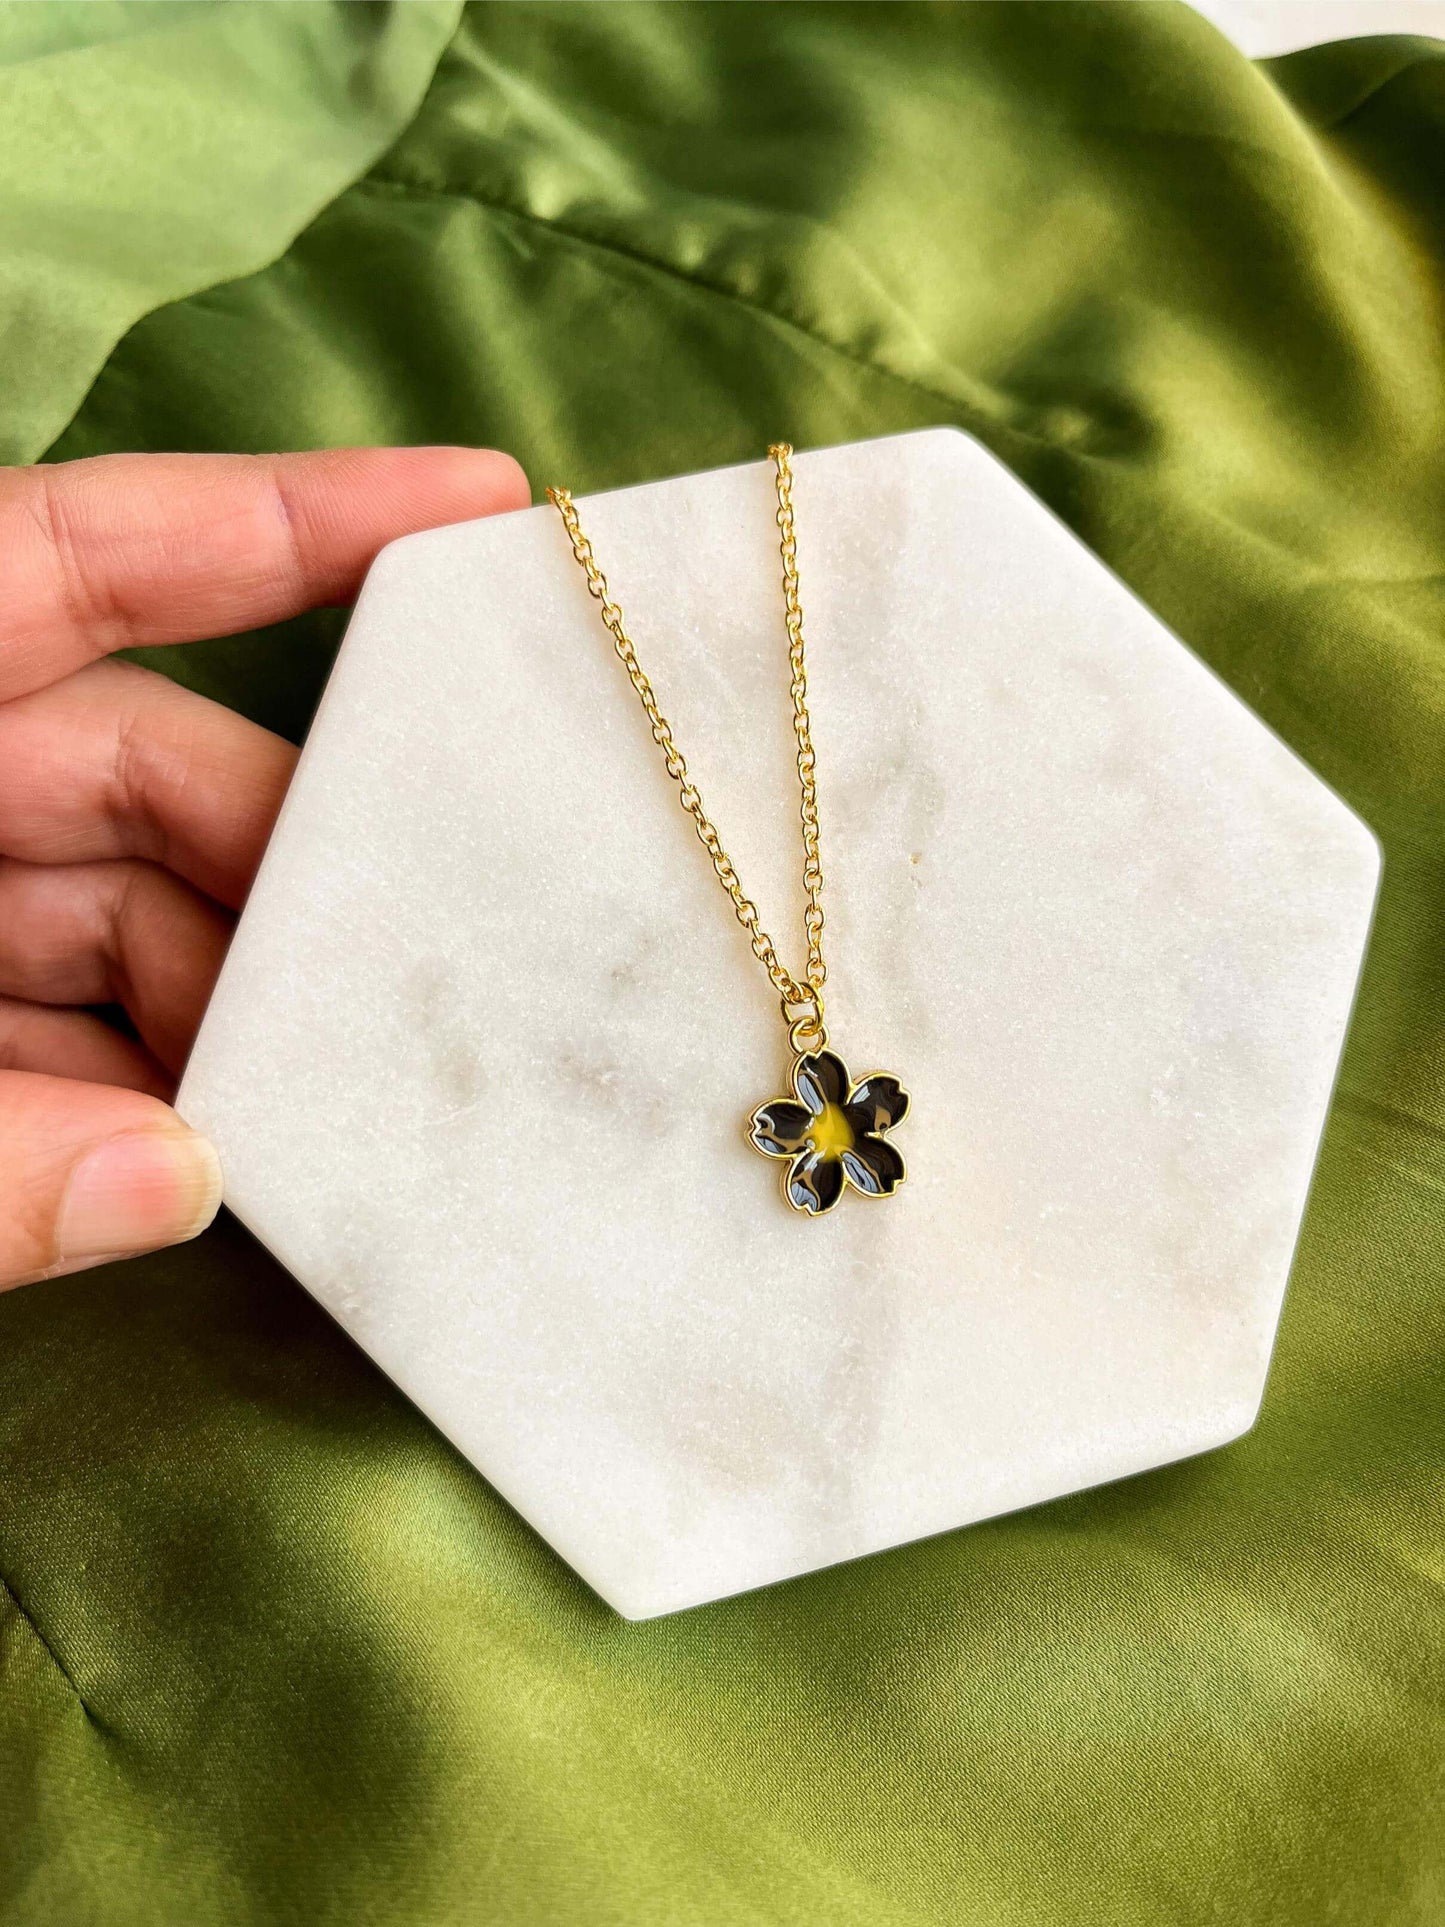 Small Glossy Flower Enamel Golden Necklace: Black